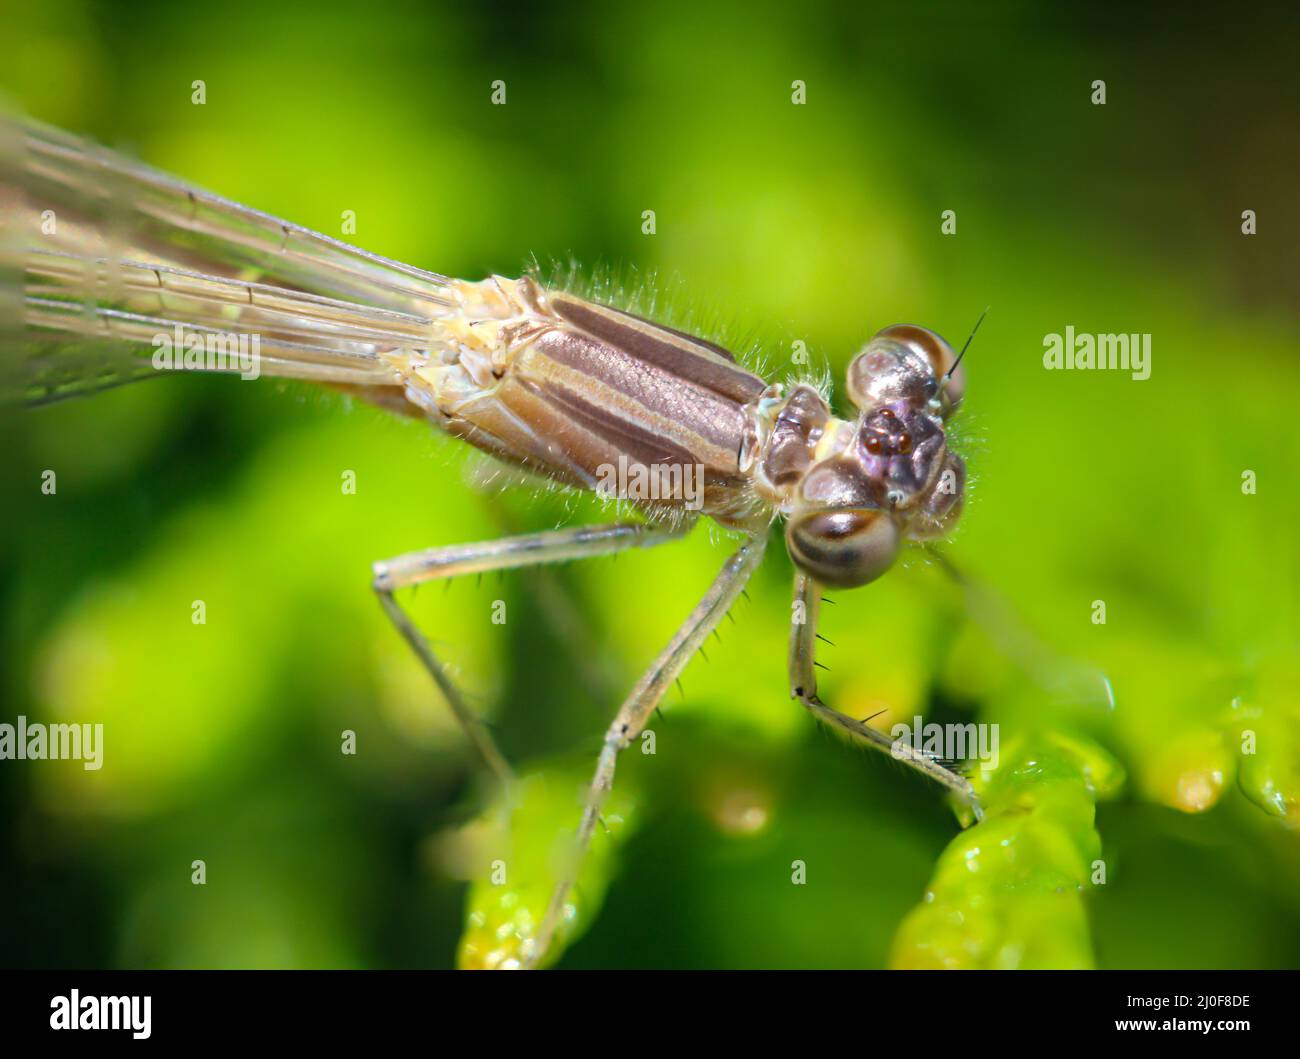 Retrato de una libélula (Zygoptera) o criada de agua. Pertenecen a las libélulas. Foto de stock